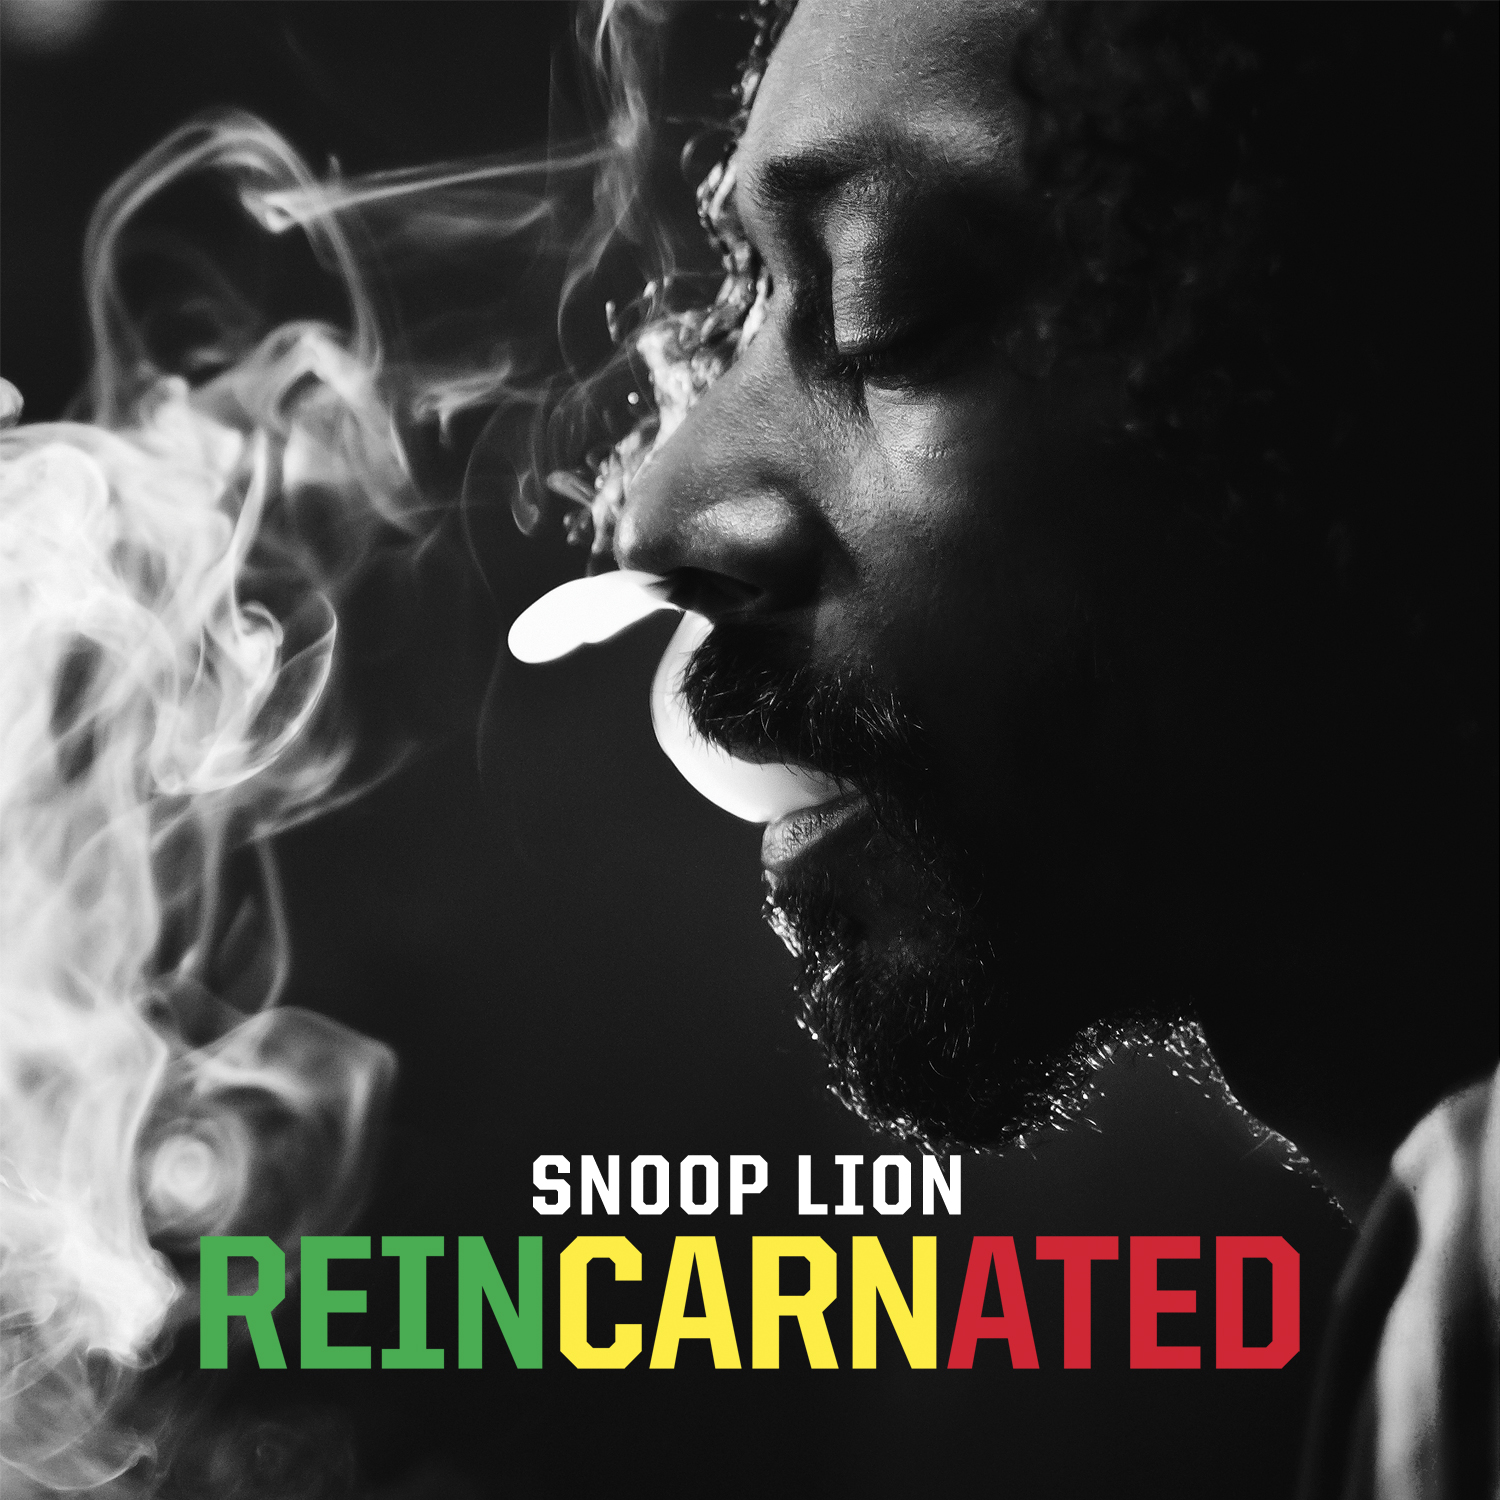 I dokumentären "Reincarnated" anammar Snoop Dogg sin nya livsstil.  